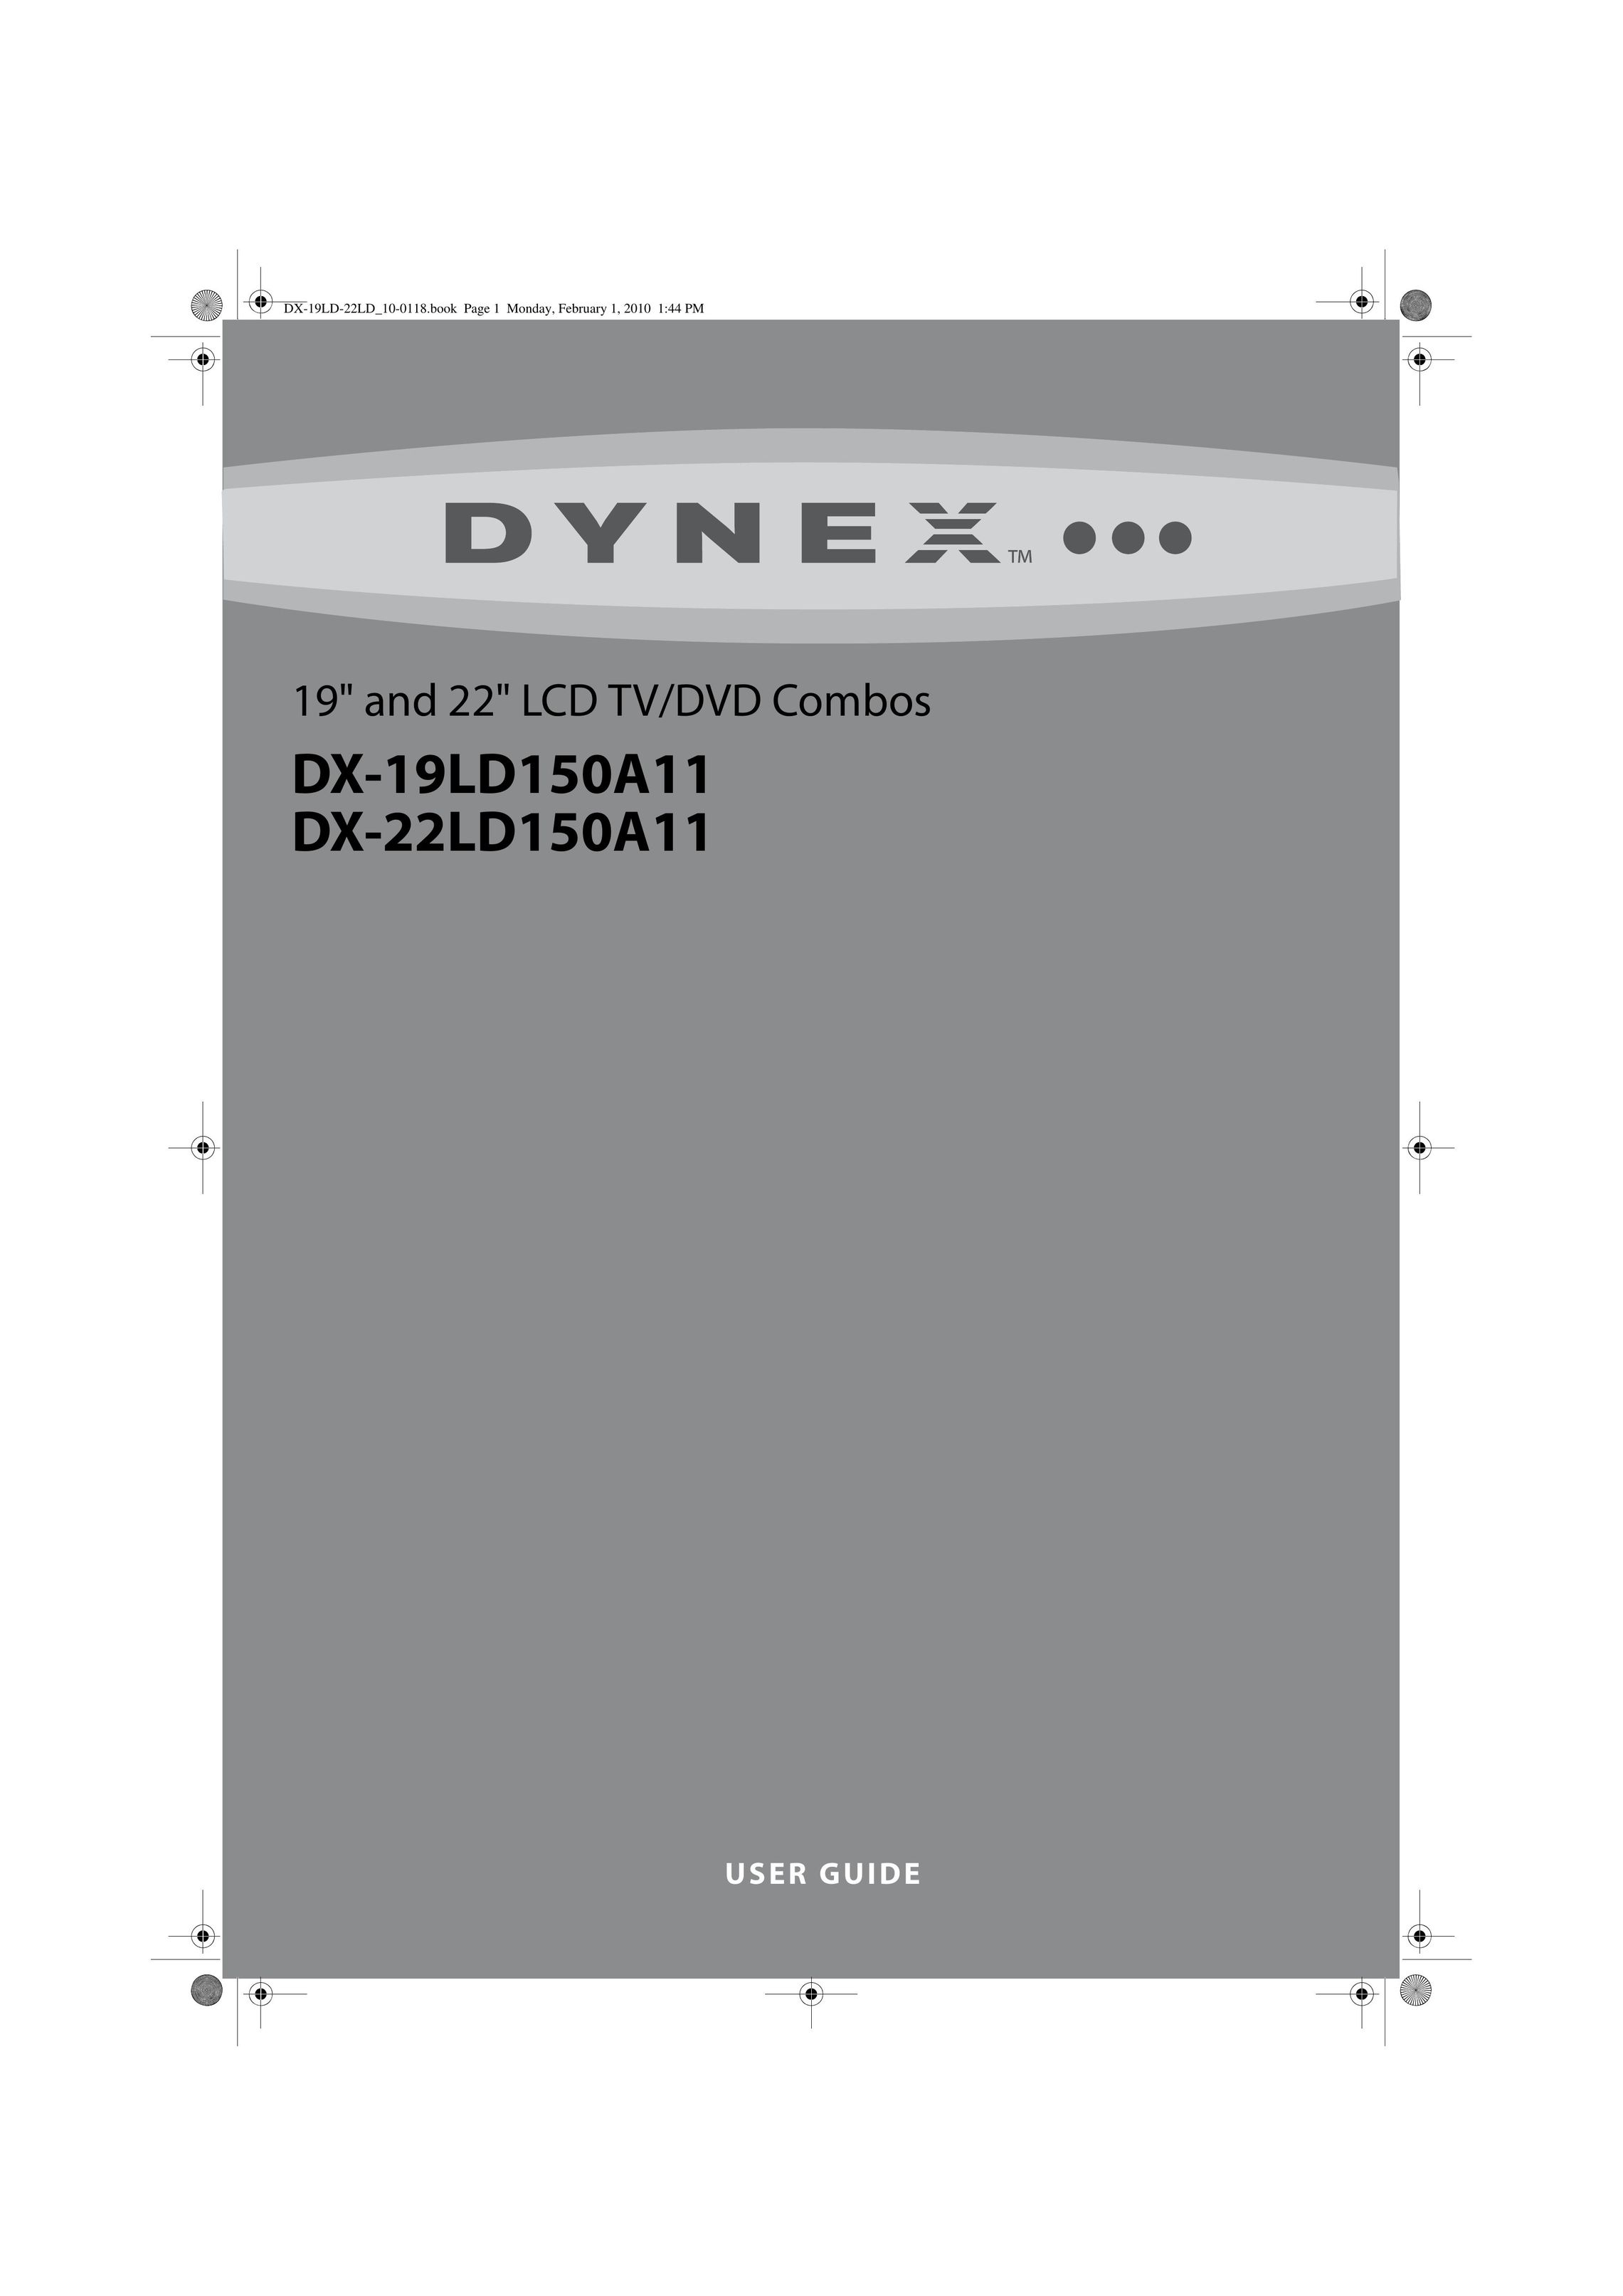 Dynex DX-22LD150A11 TV DVD Combo User Manual